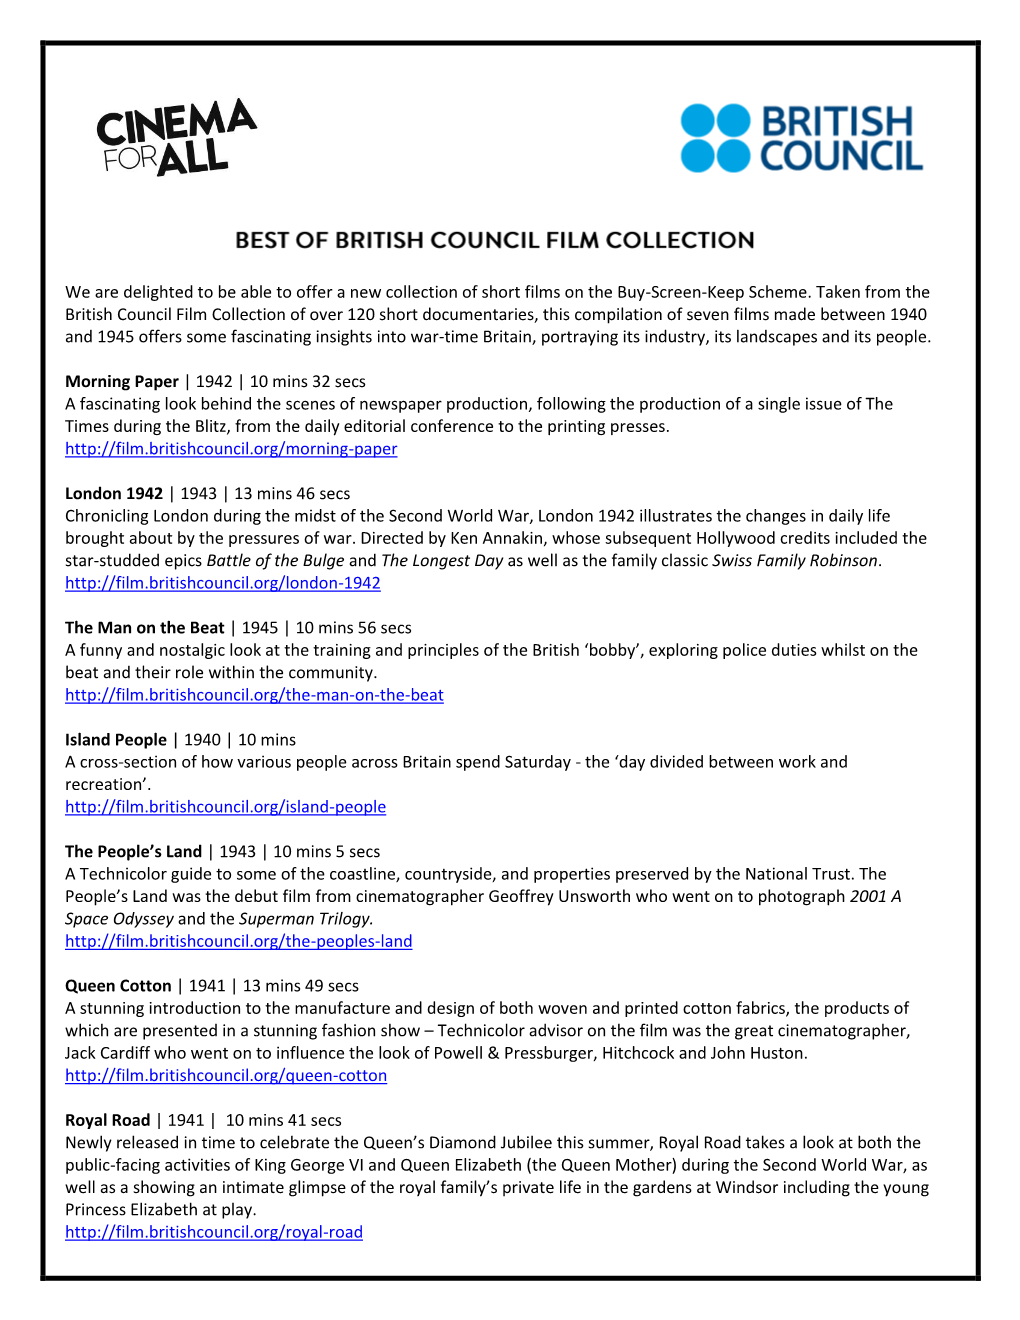 British Council Compilation